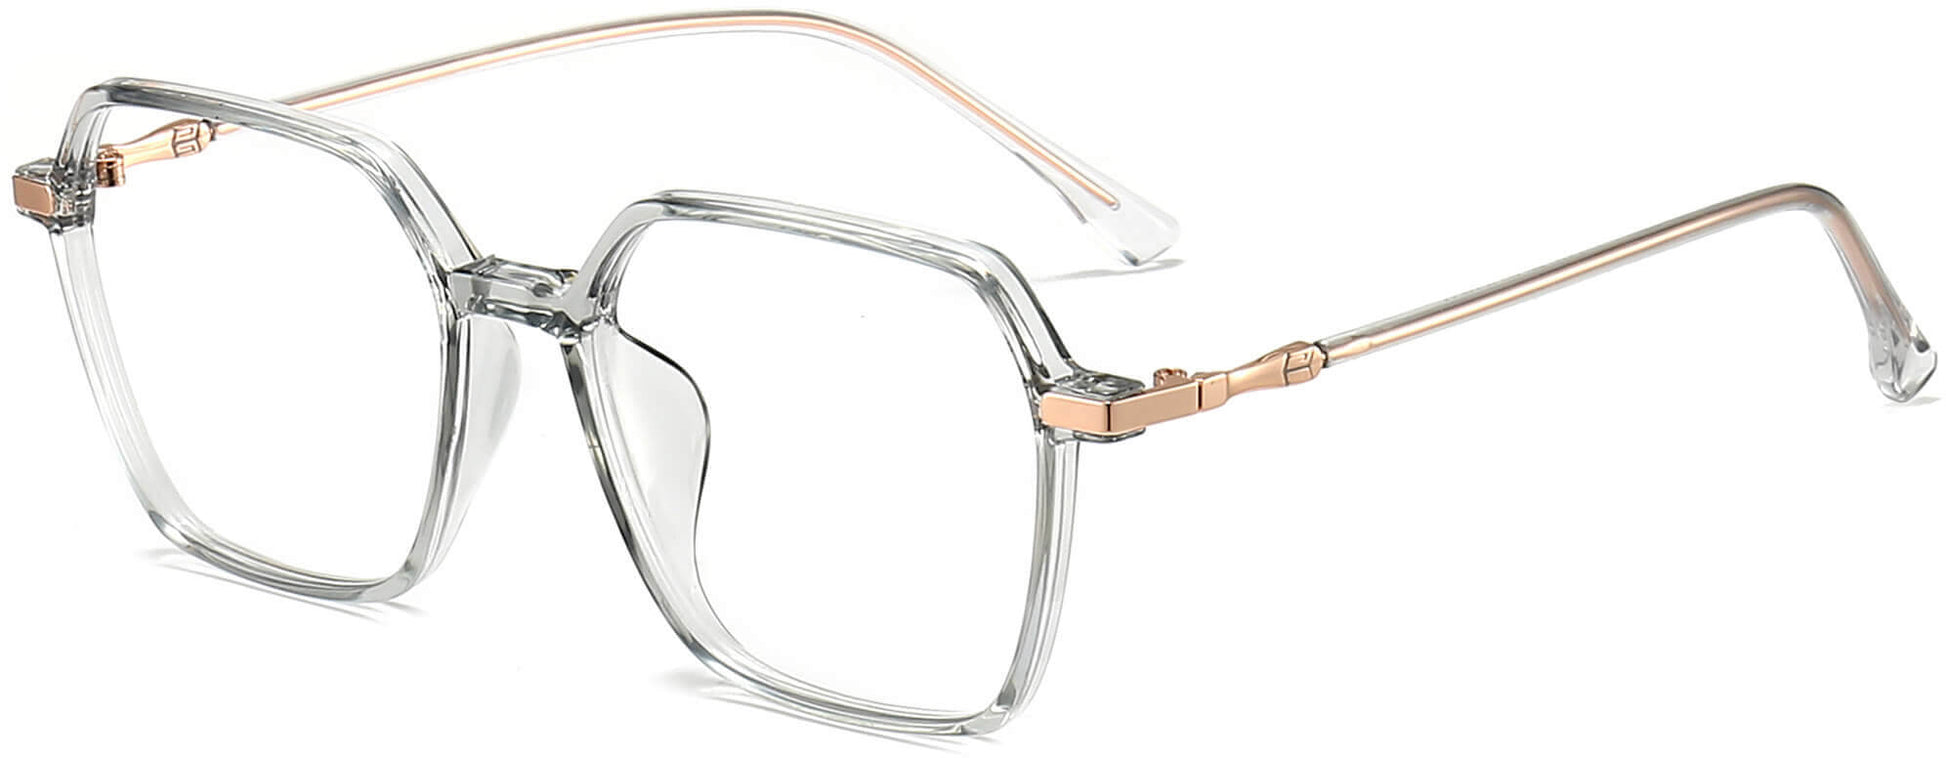 Sylvia Geometric Gray Eyeglasses from ANRRI, angle view